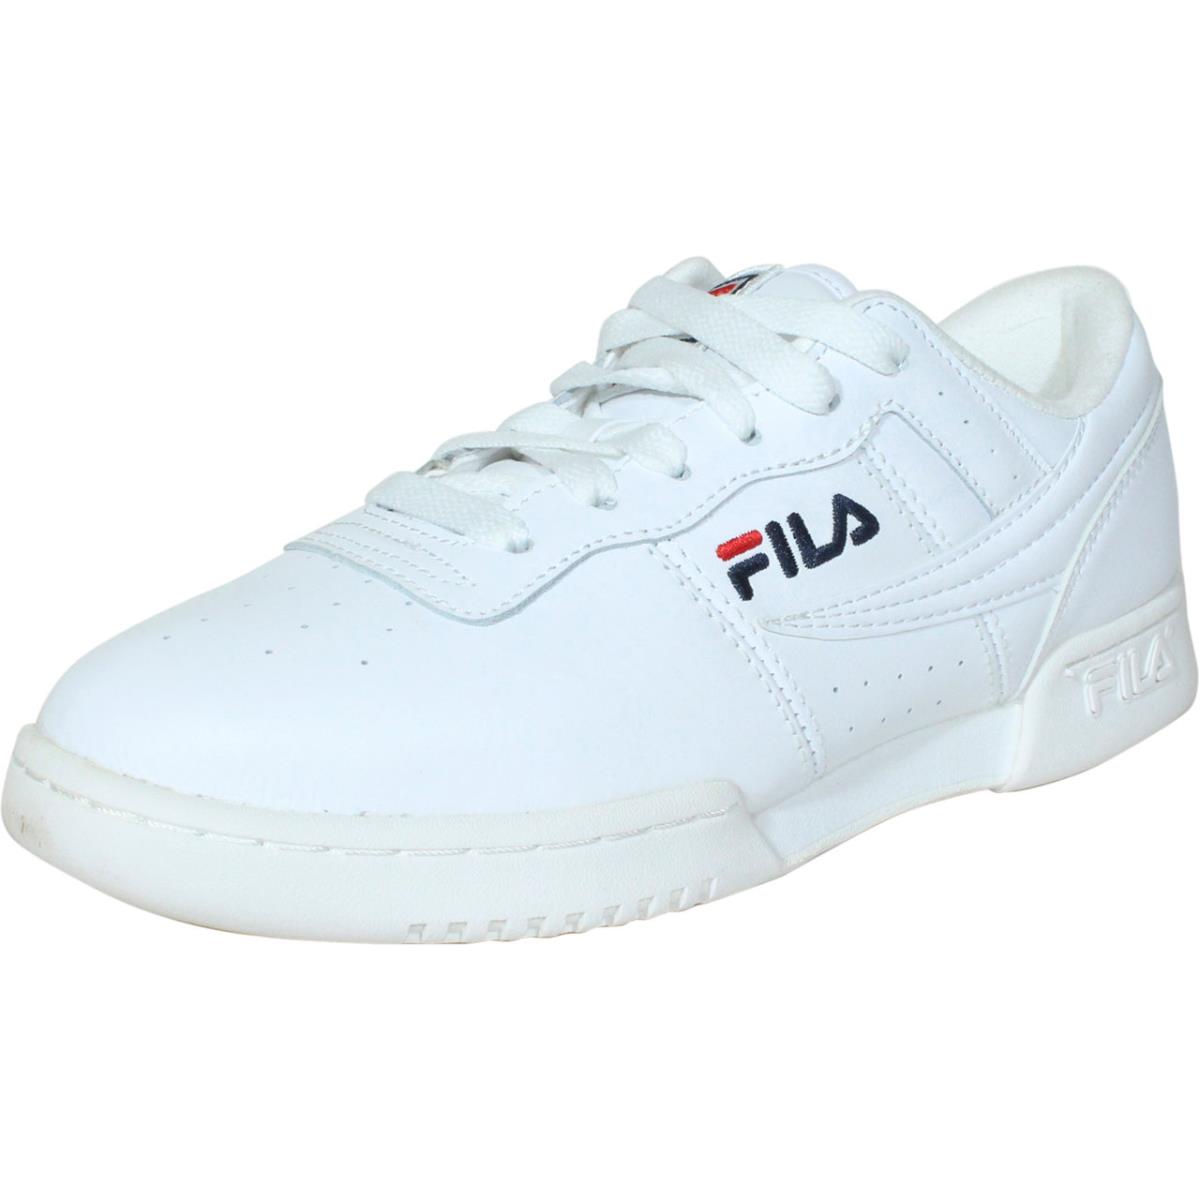 Fila Original Fitness Fitness Sneakers Men`s Shoes White/White/Navy-Red